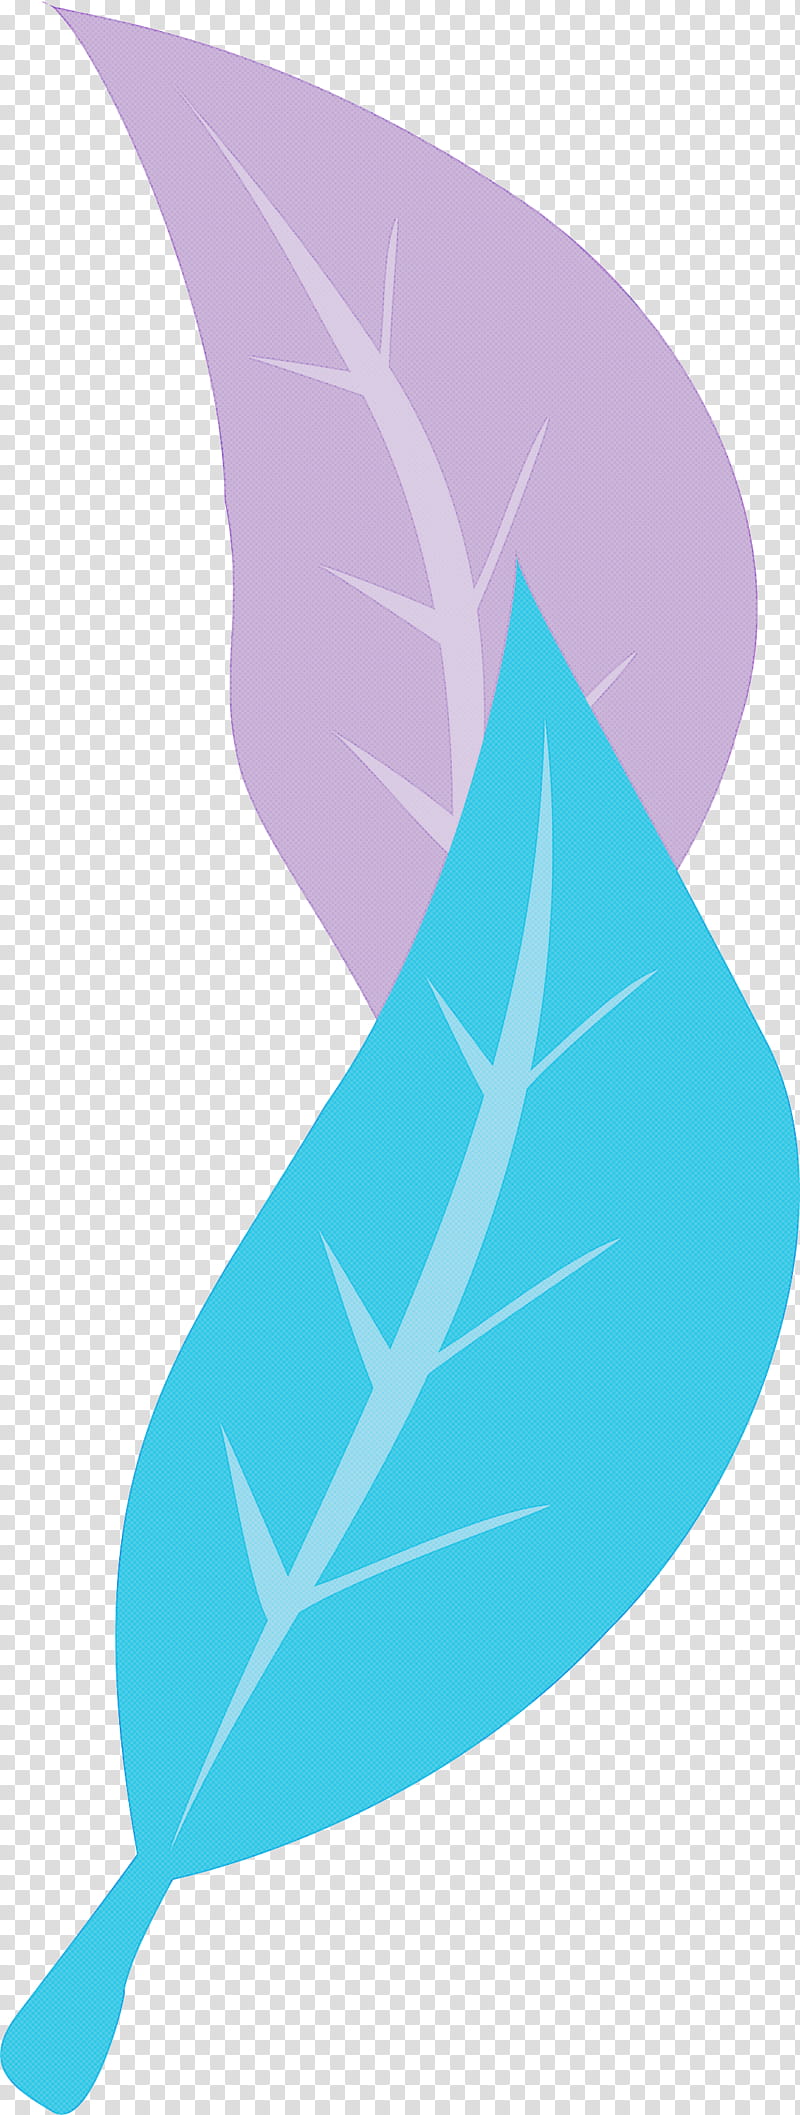 Fruit tree, Leaf, Line Art, Cartoon, Drawing, Plant Stem, Logo, Calathea Ornata transparent background PNG clipart